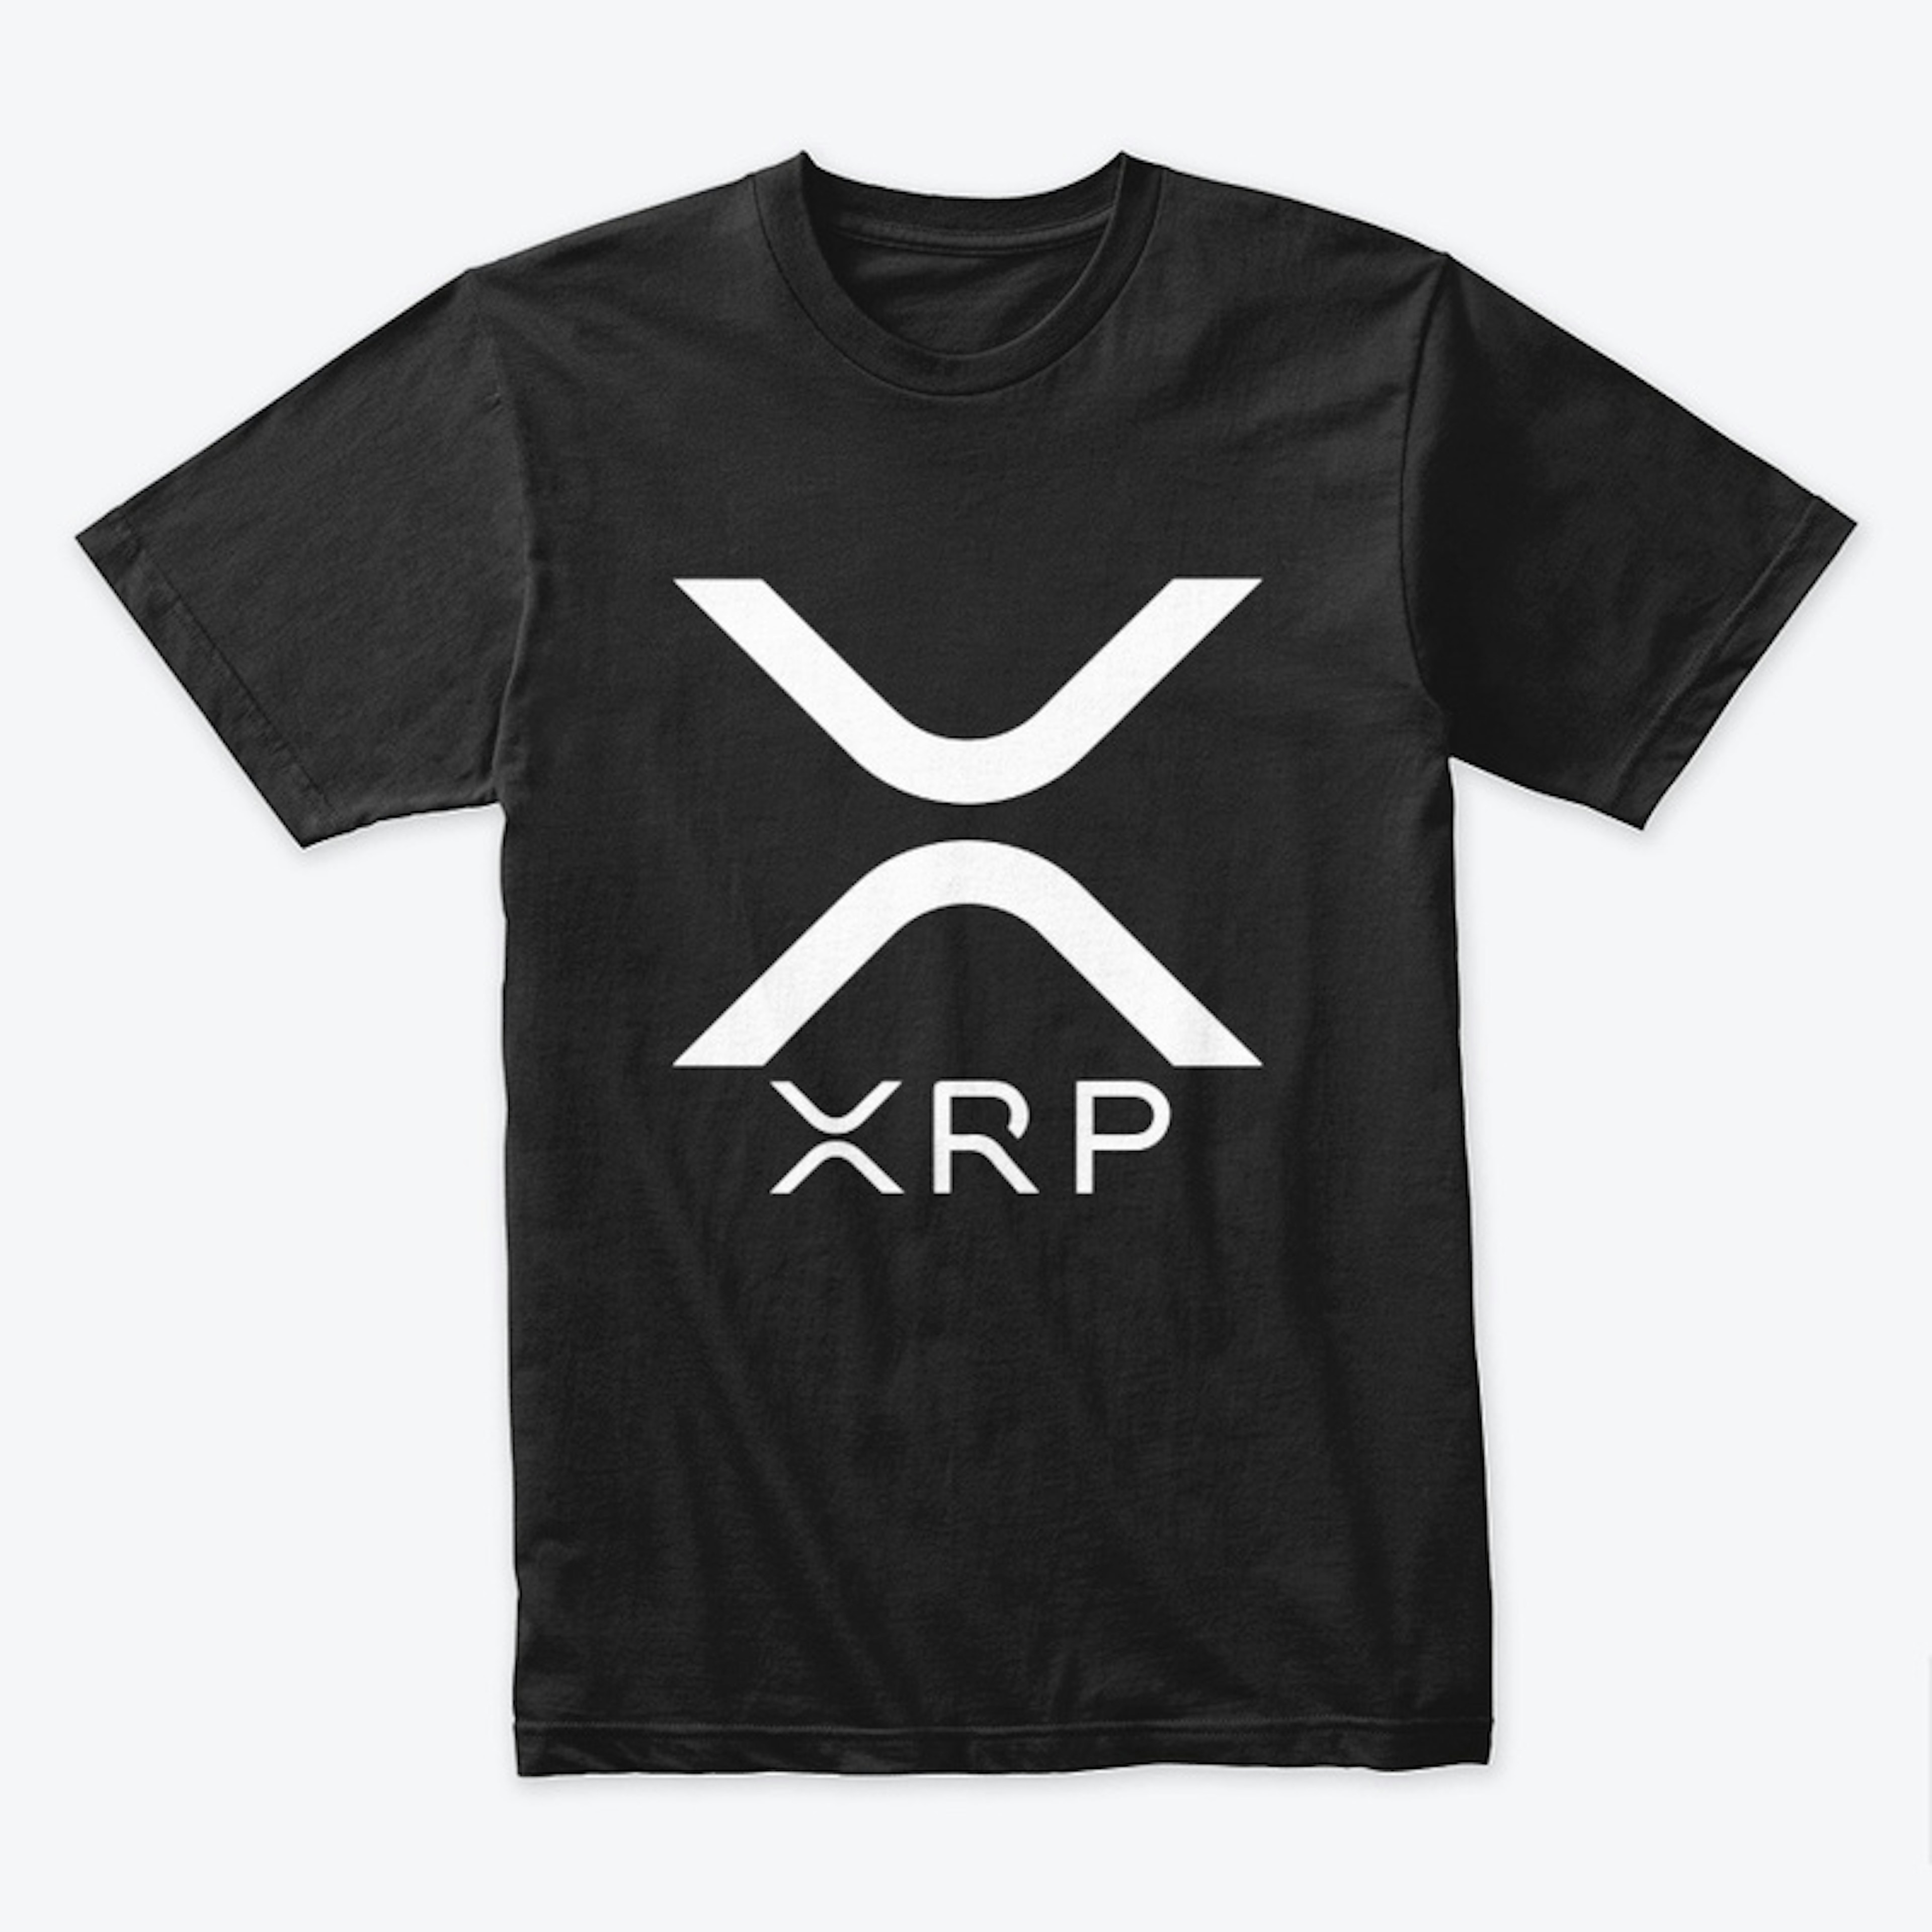 XRP PREMIUM T-SHIRT